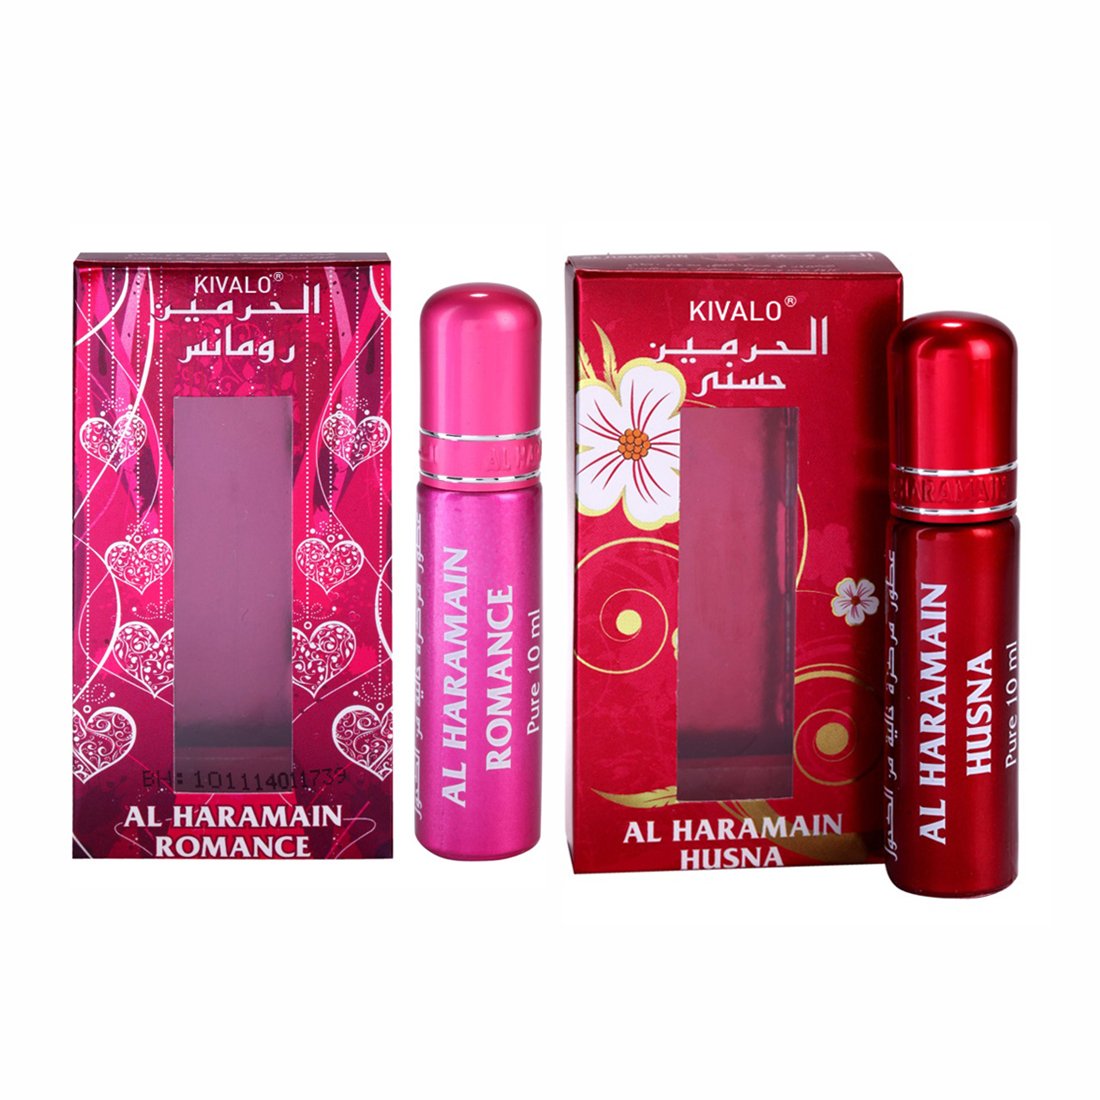 Al Haramain Romance & Husna Roll On Attar 10 ml Pack of 2